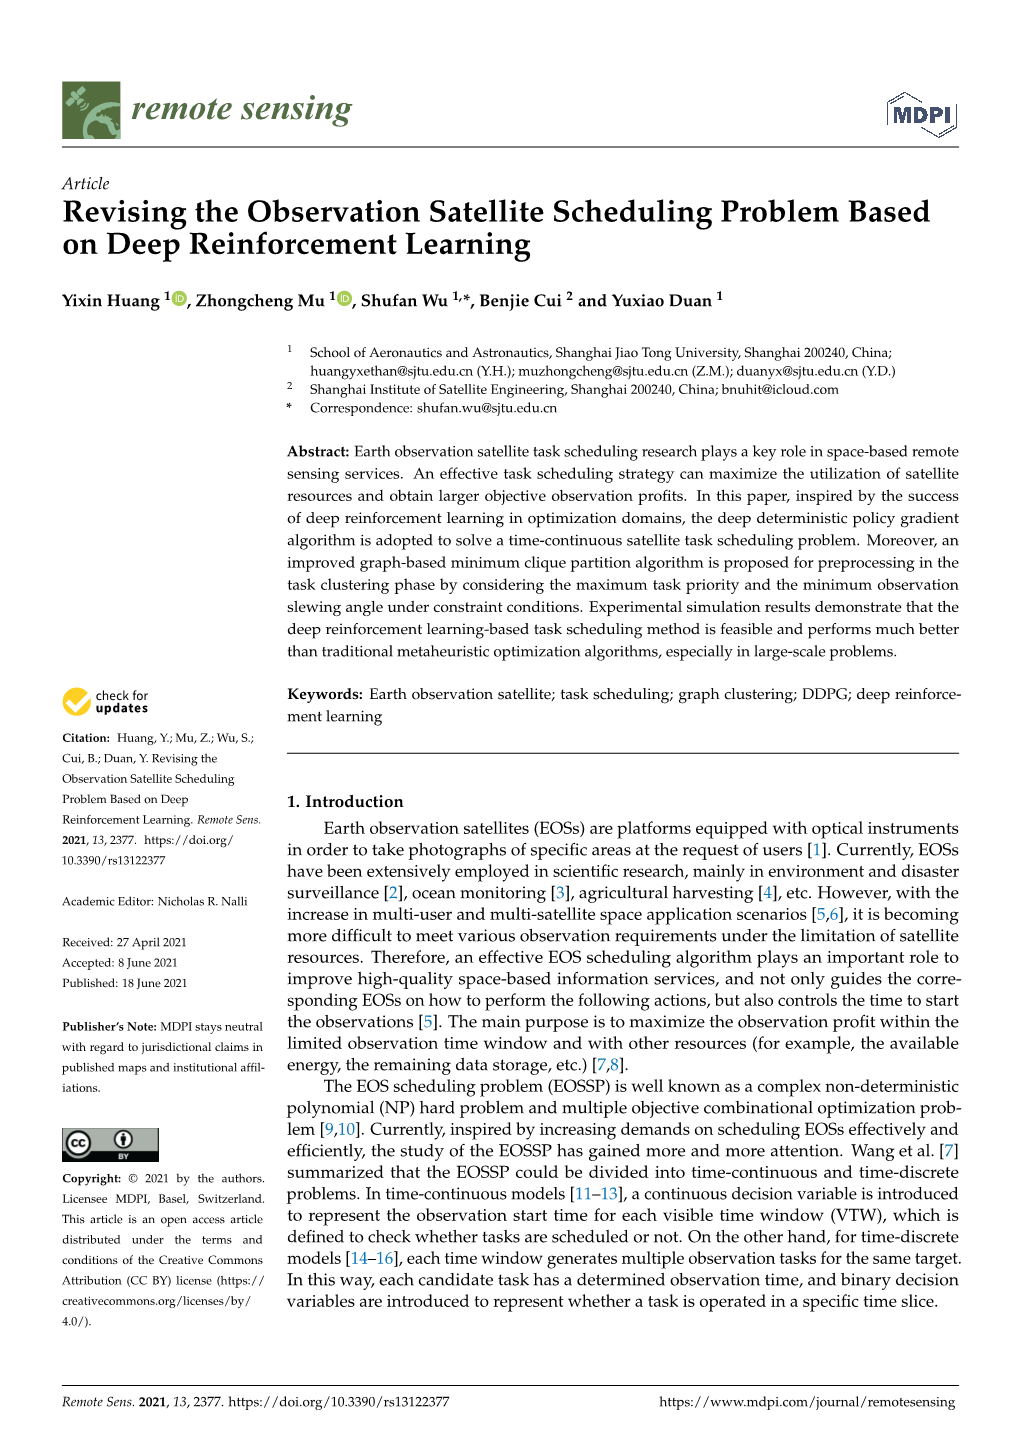 Revising the Observation Satellite Scheduling Problem Based on Deep Reinforcement Learning